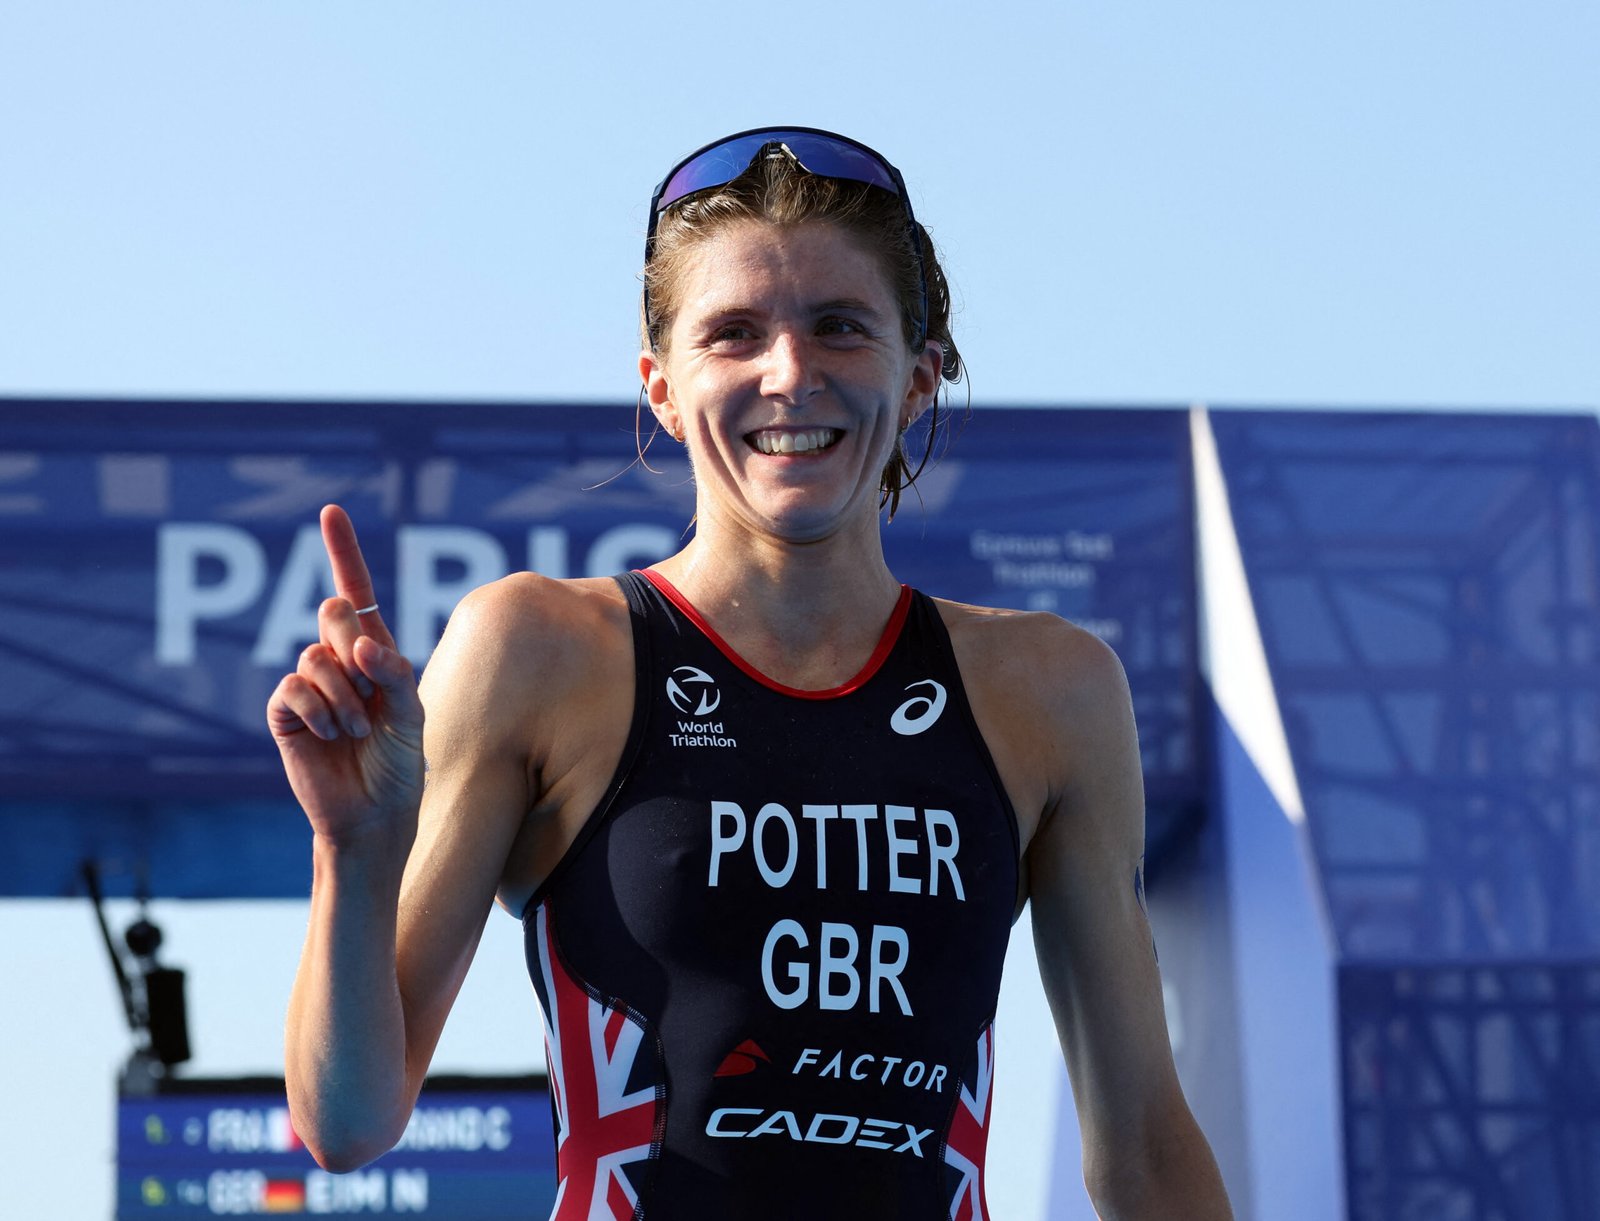 triathlon-britain’s-potter-wins-world-title-after-brilliant-run